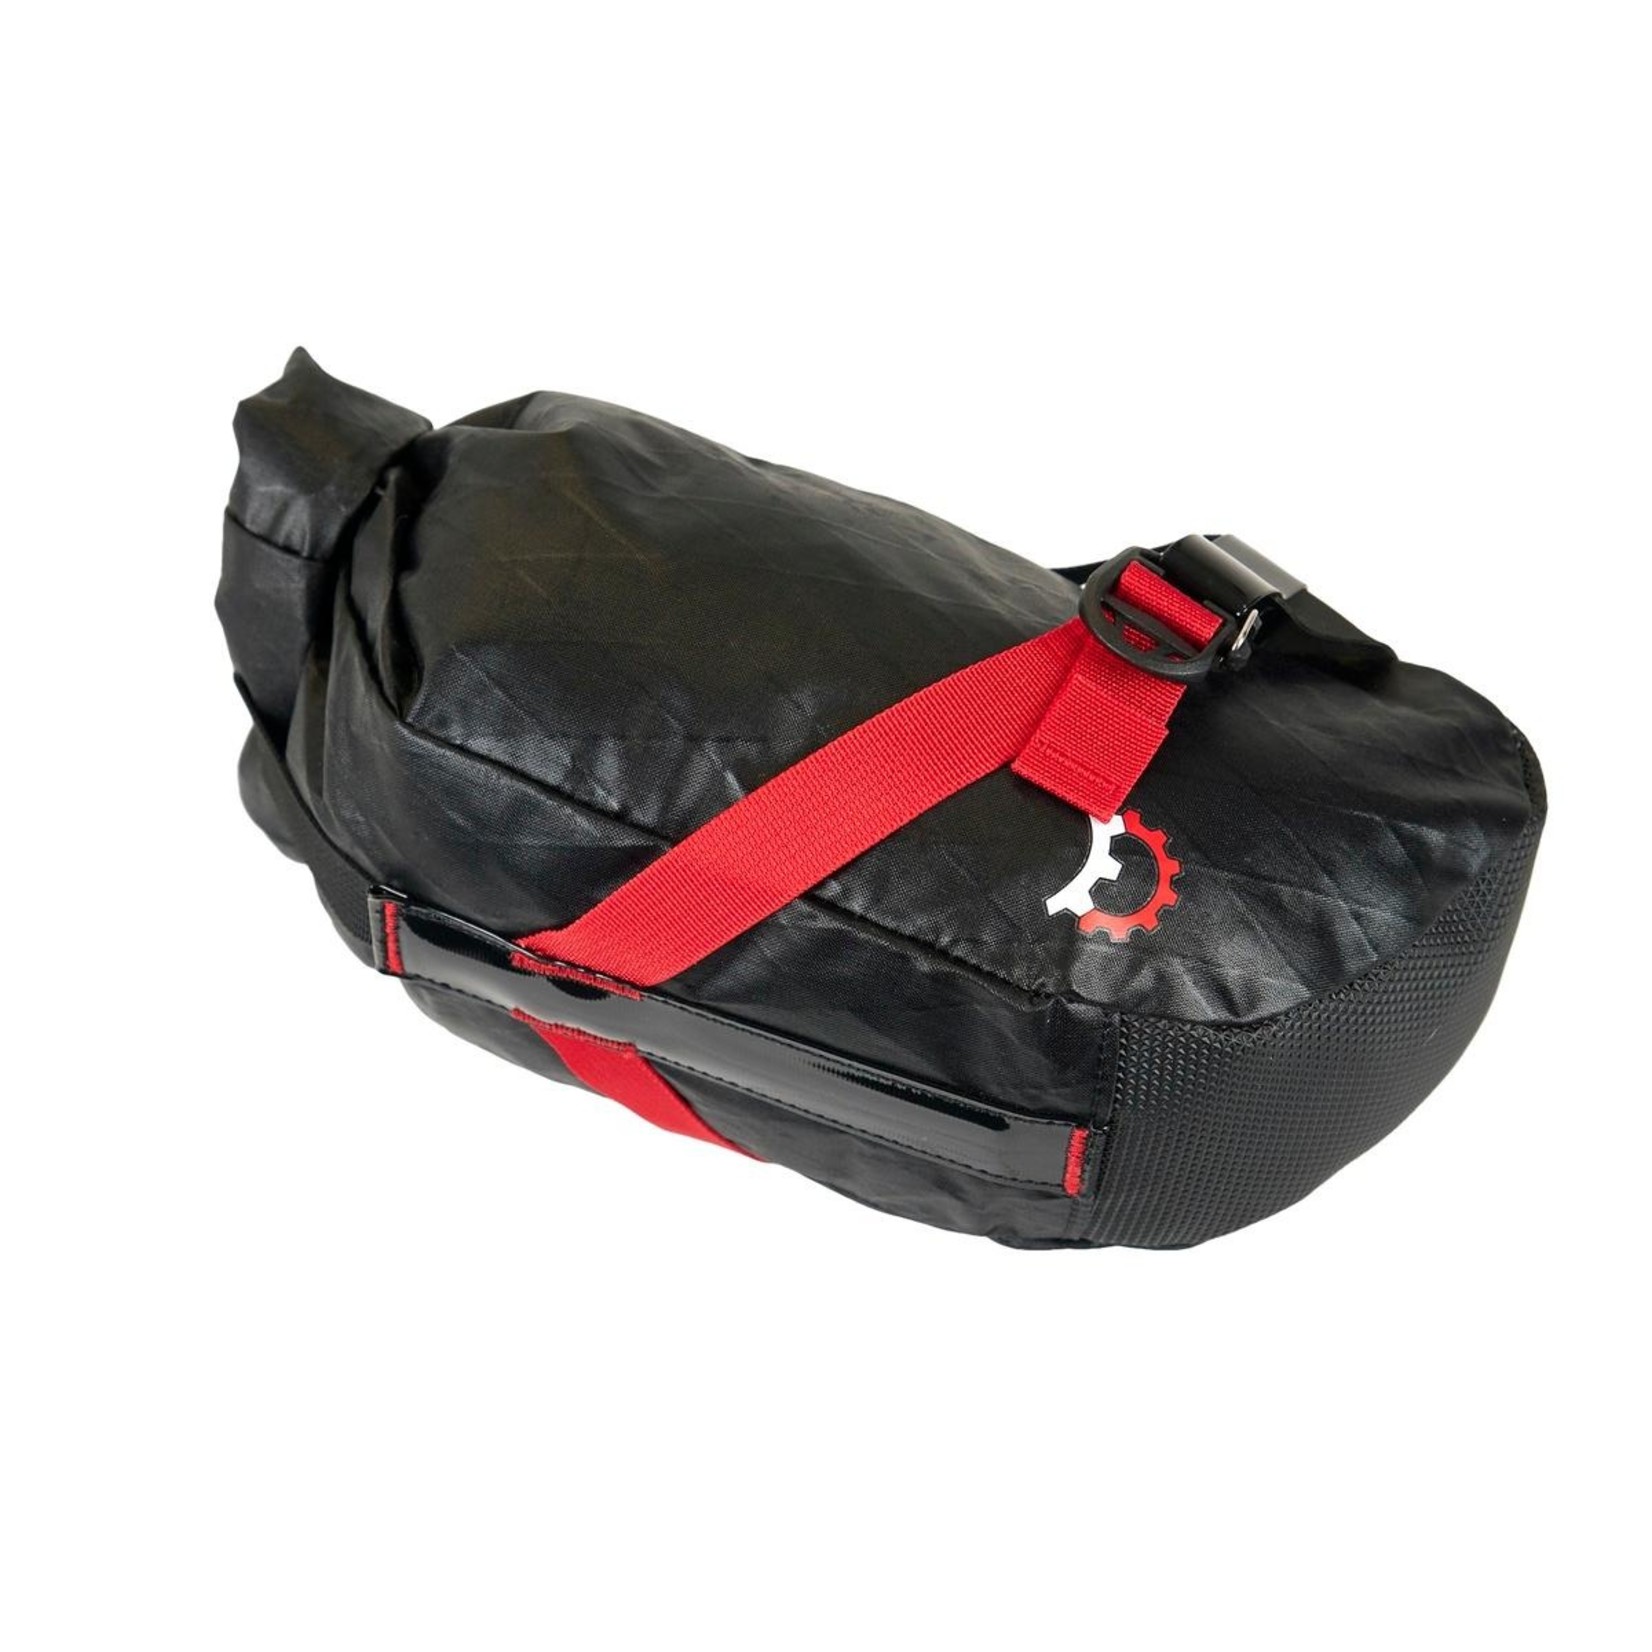 Revelate Designs Revelate Designs, Shrew Seat Bag